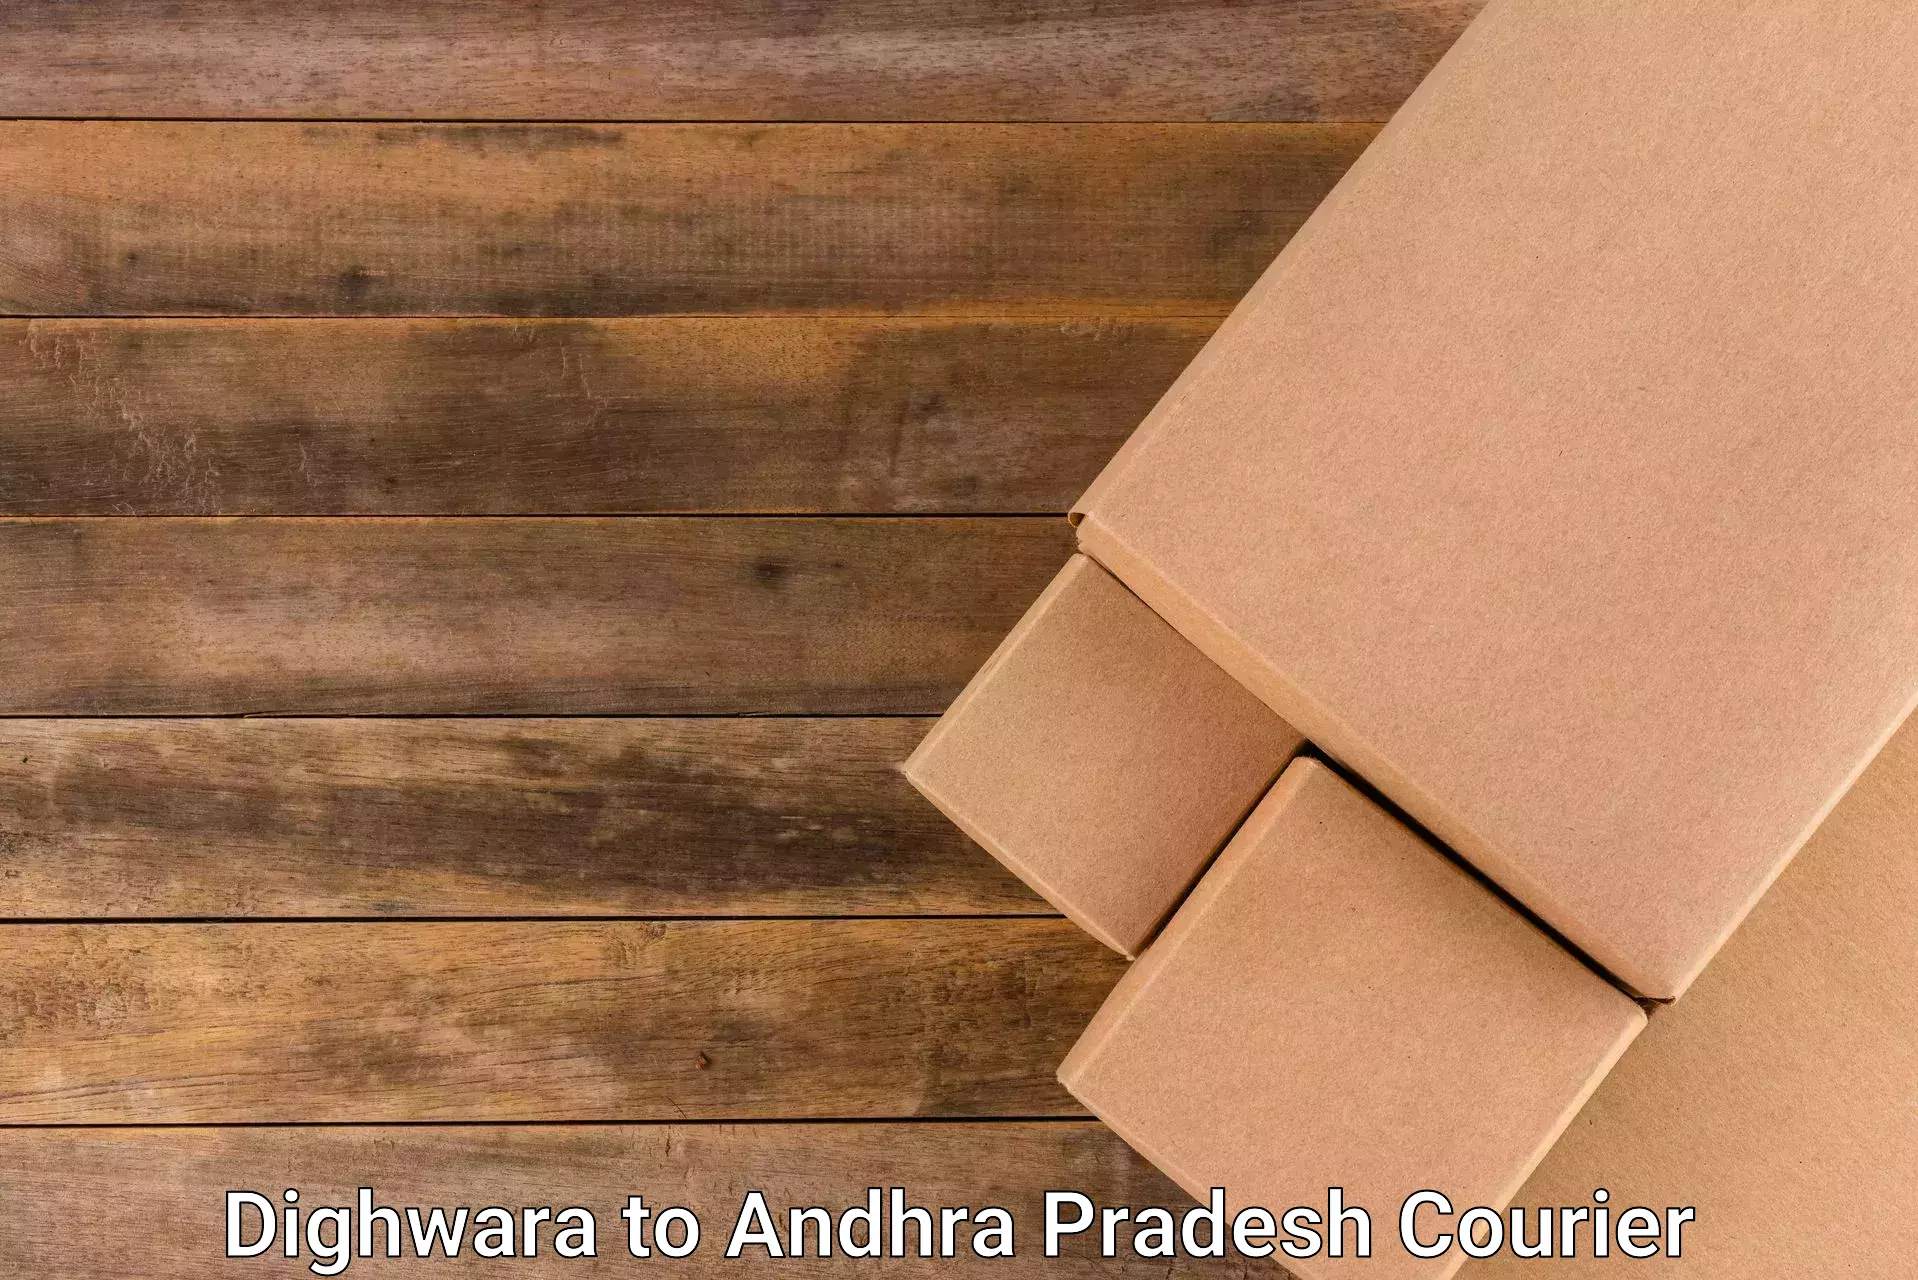 Easy return solutions Dighwara to Andhra Pradesh